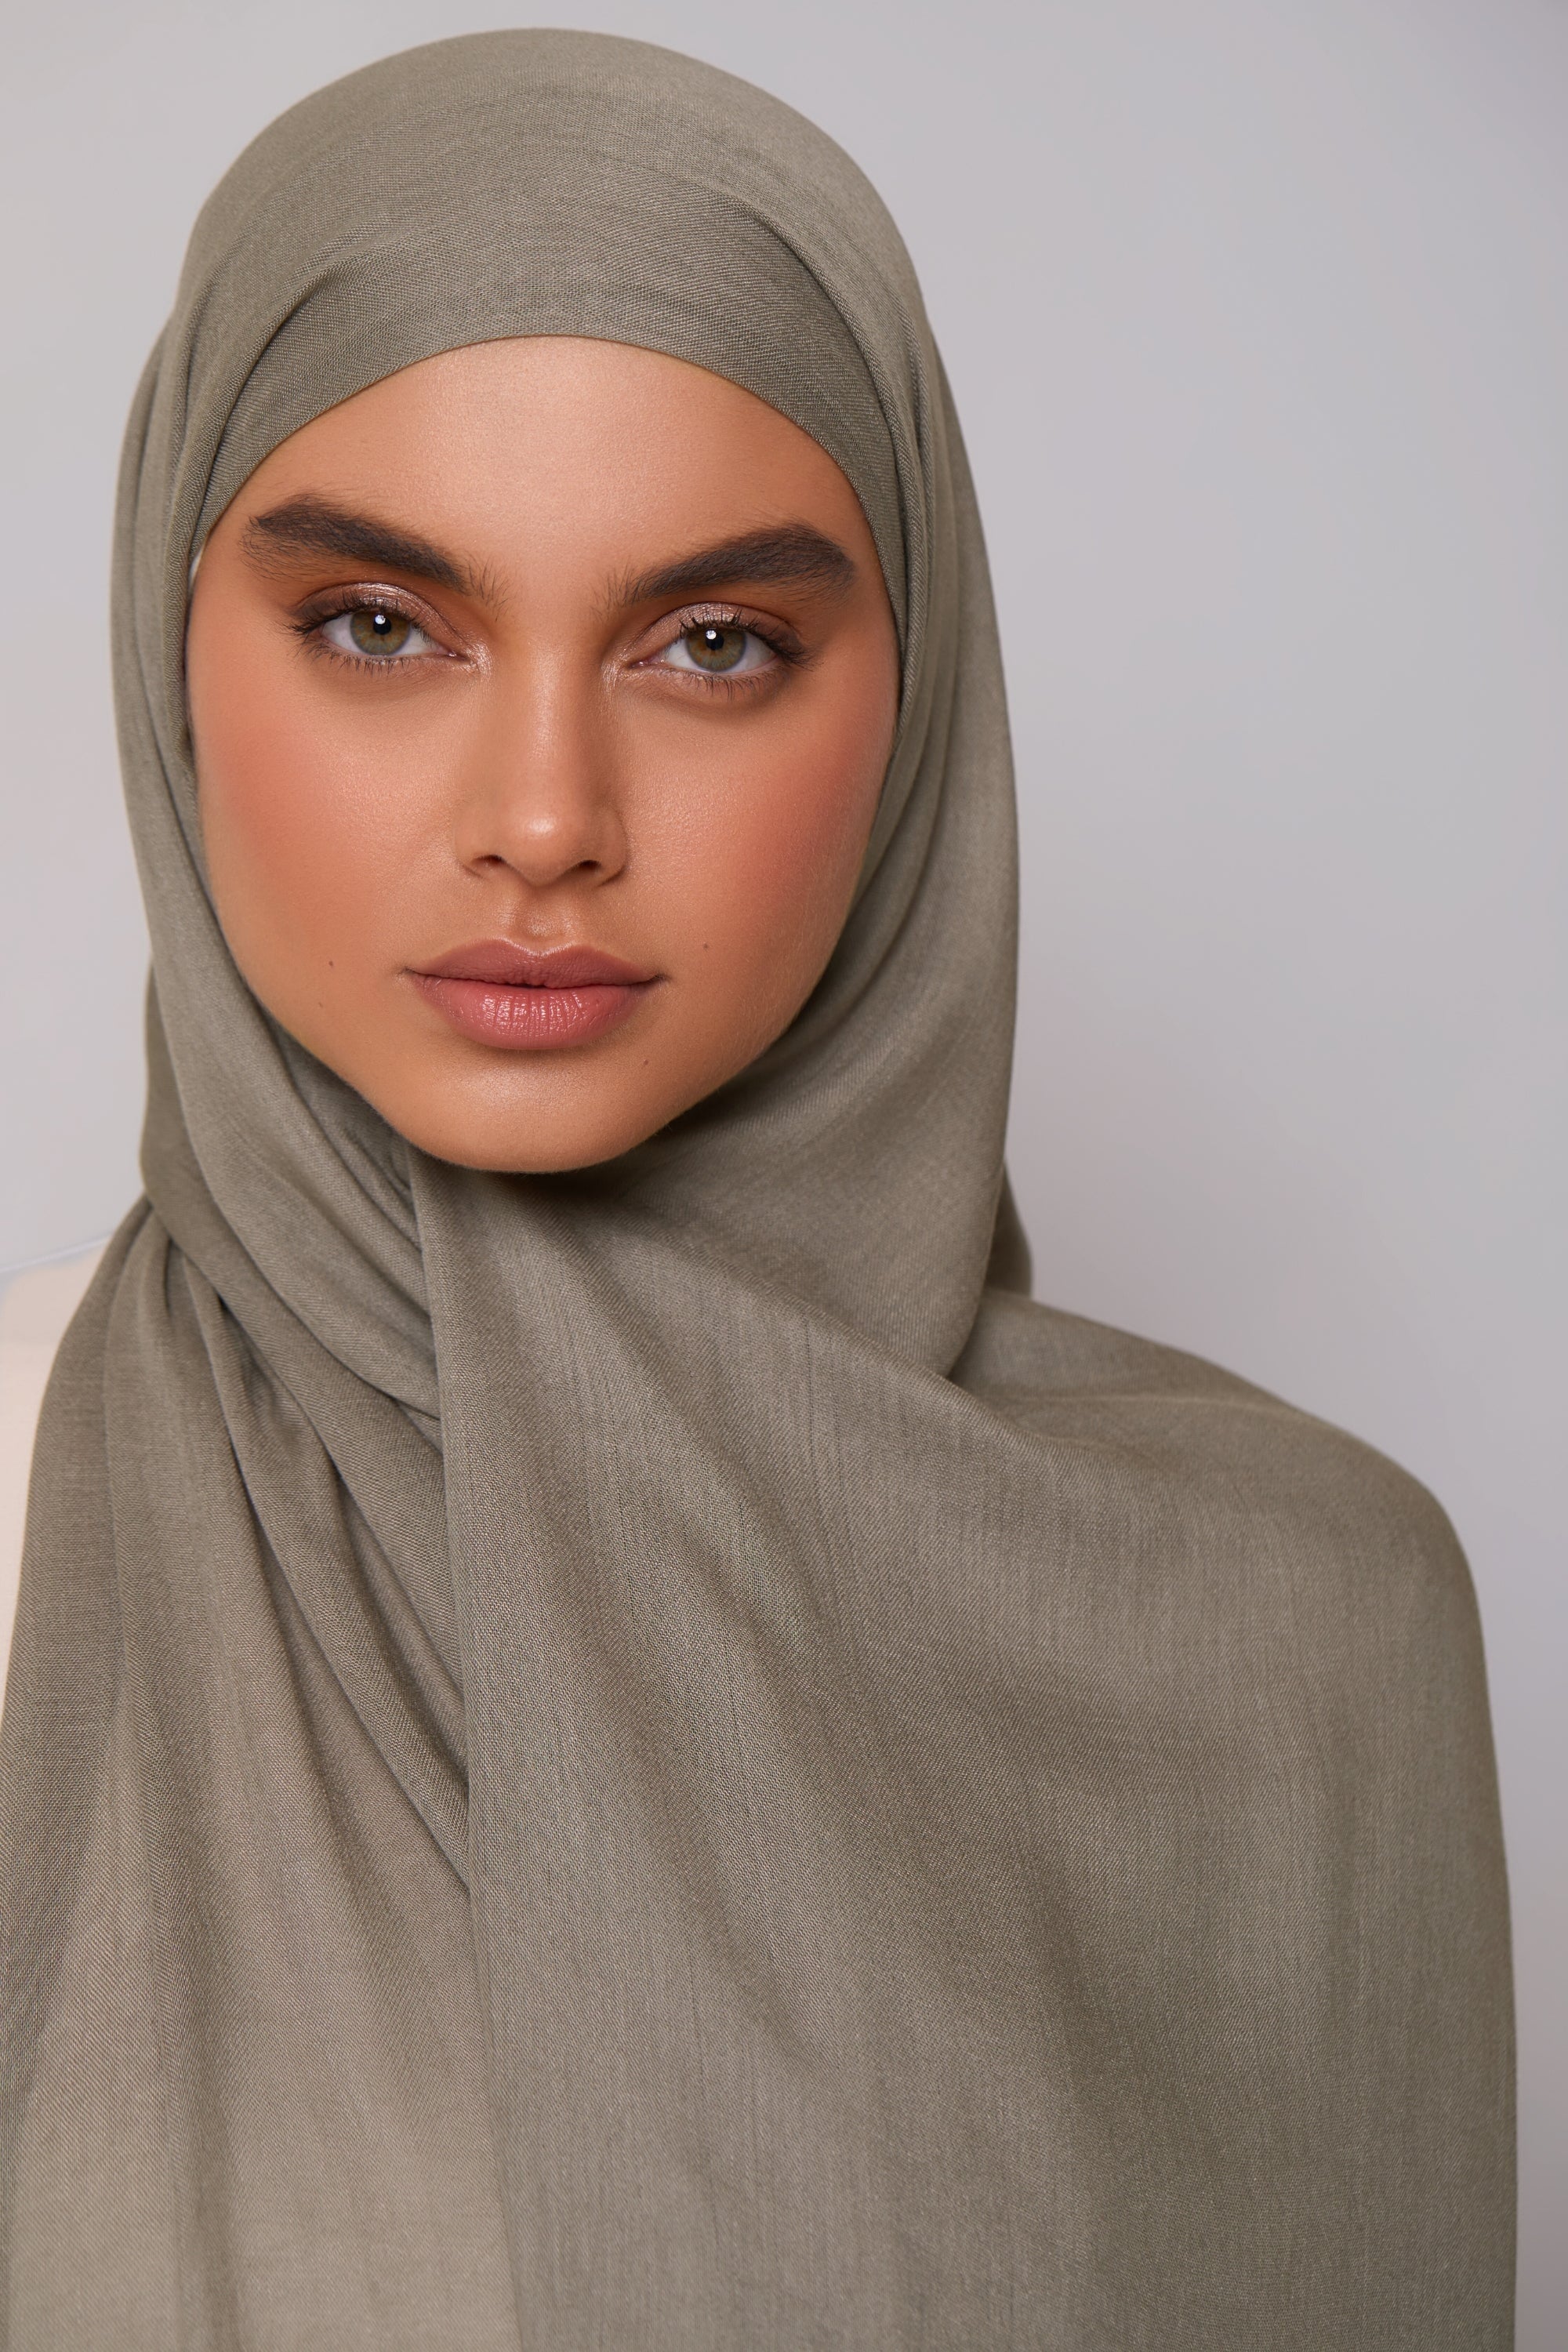 Modal Hijab - Desert Sage epschoolboard 